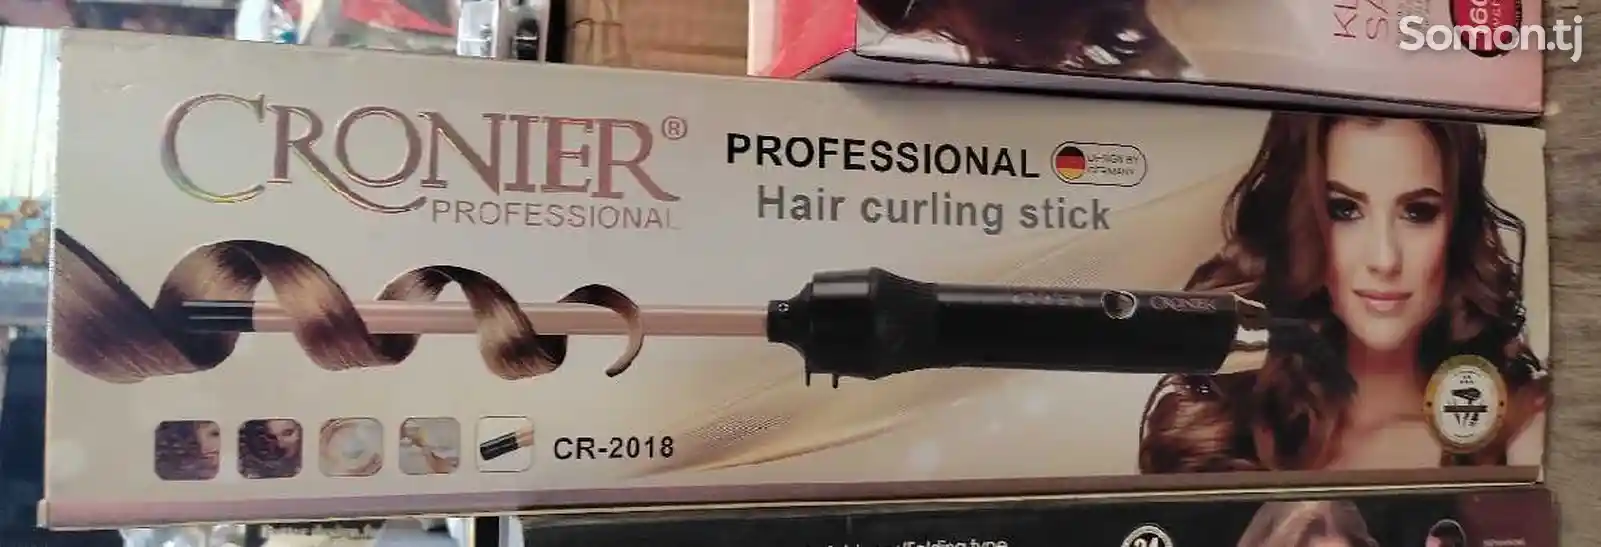 Утюжок для стрижки волос Cronier